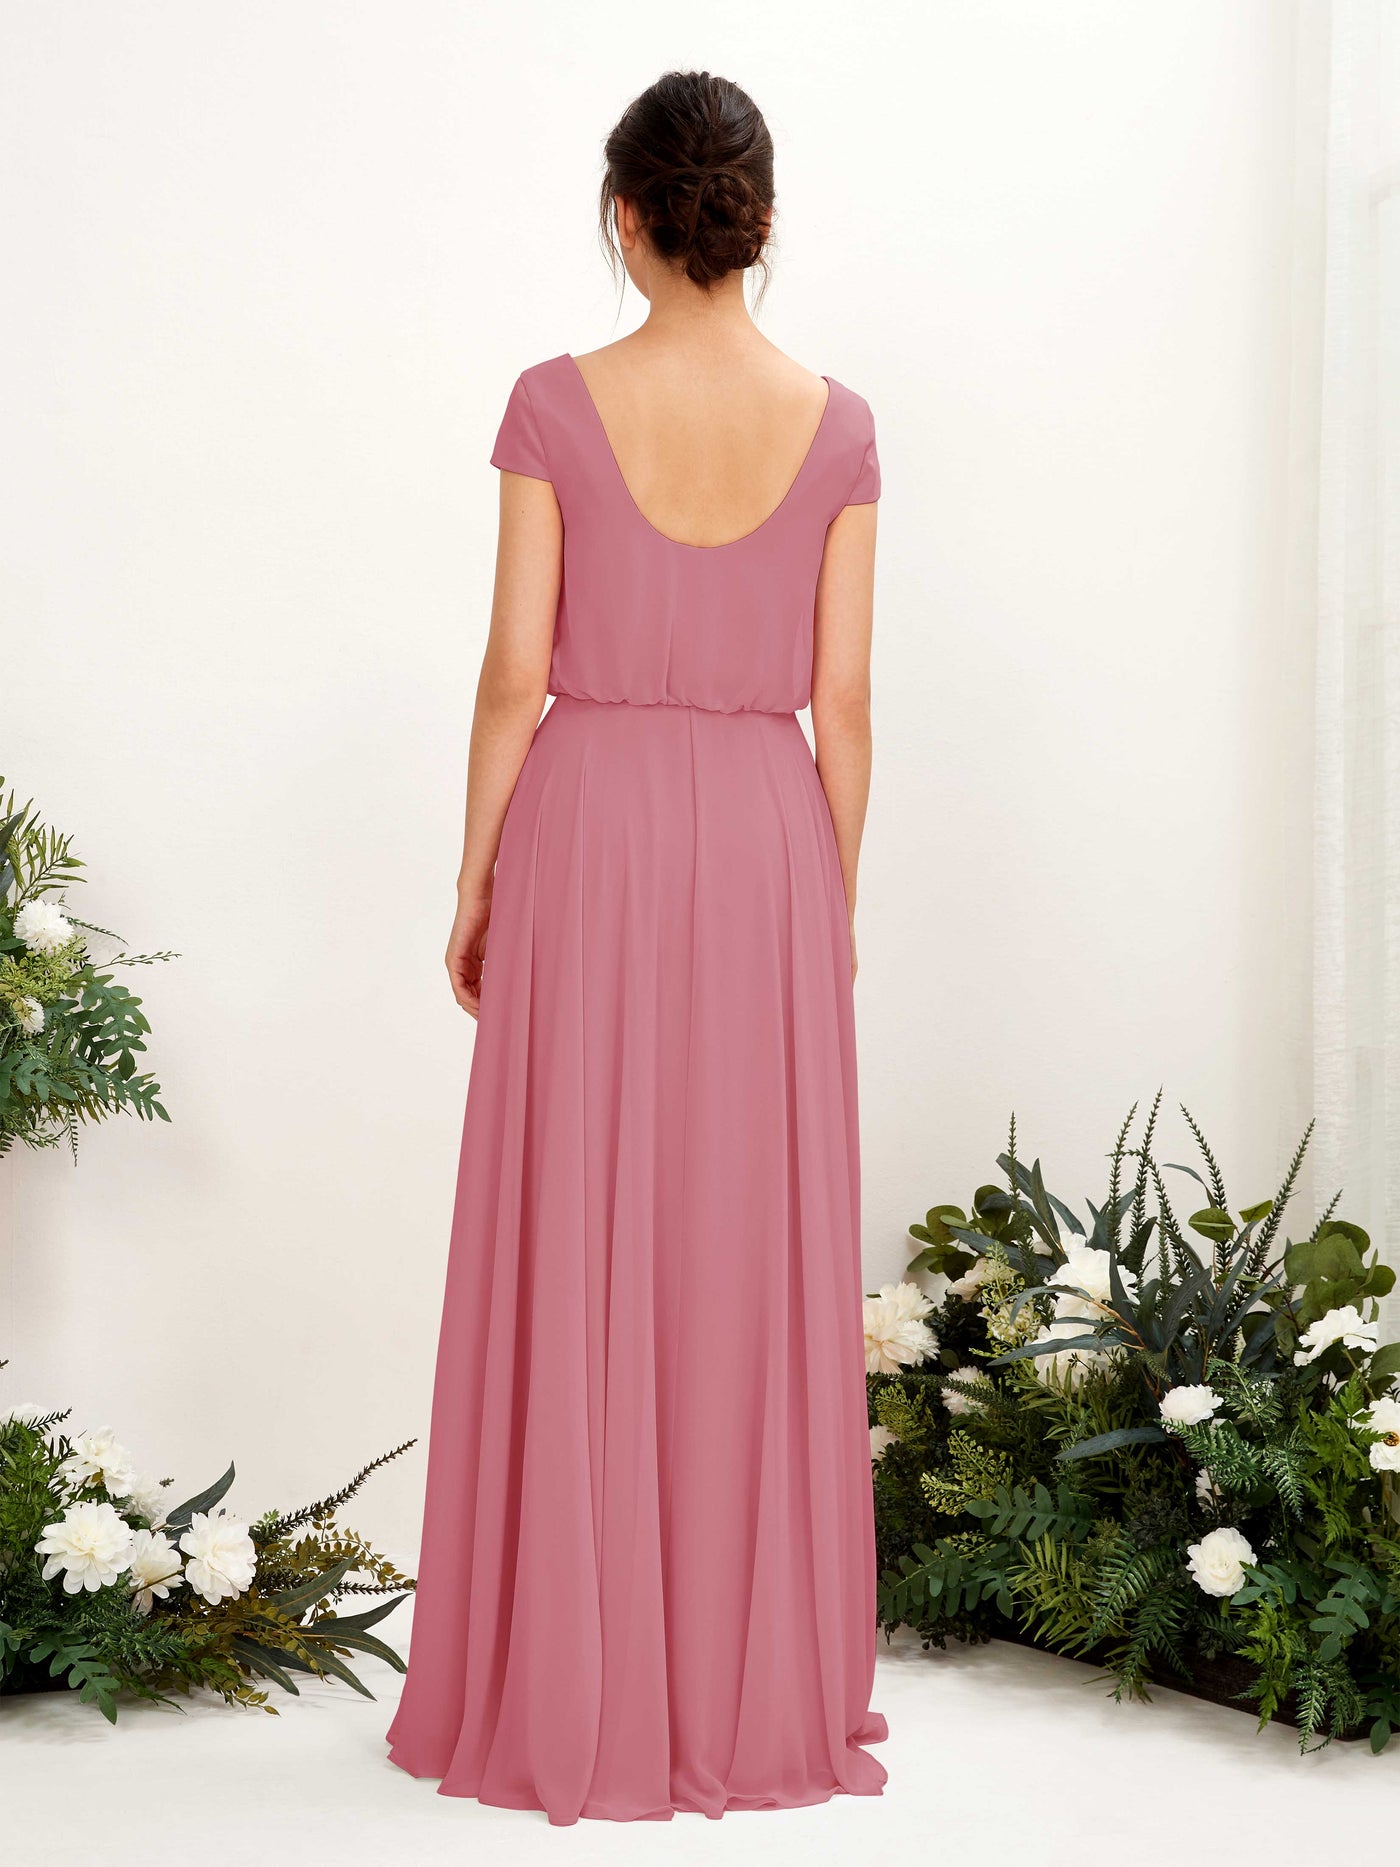 Desert Rose Bridesmaid Dresses Bridesmaid Dress A-line Chiffon V-neck Full Length Short Sleeves Wedding Party Dress (81221811)#color_desert-rose